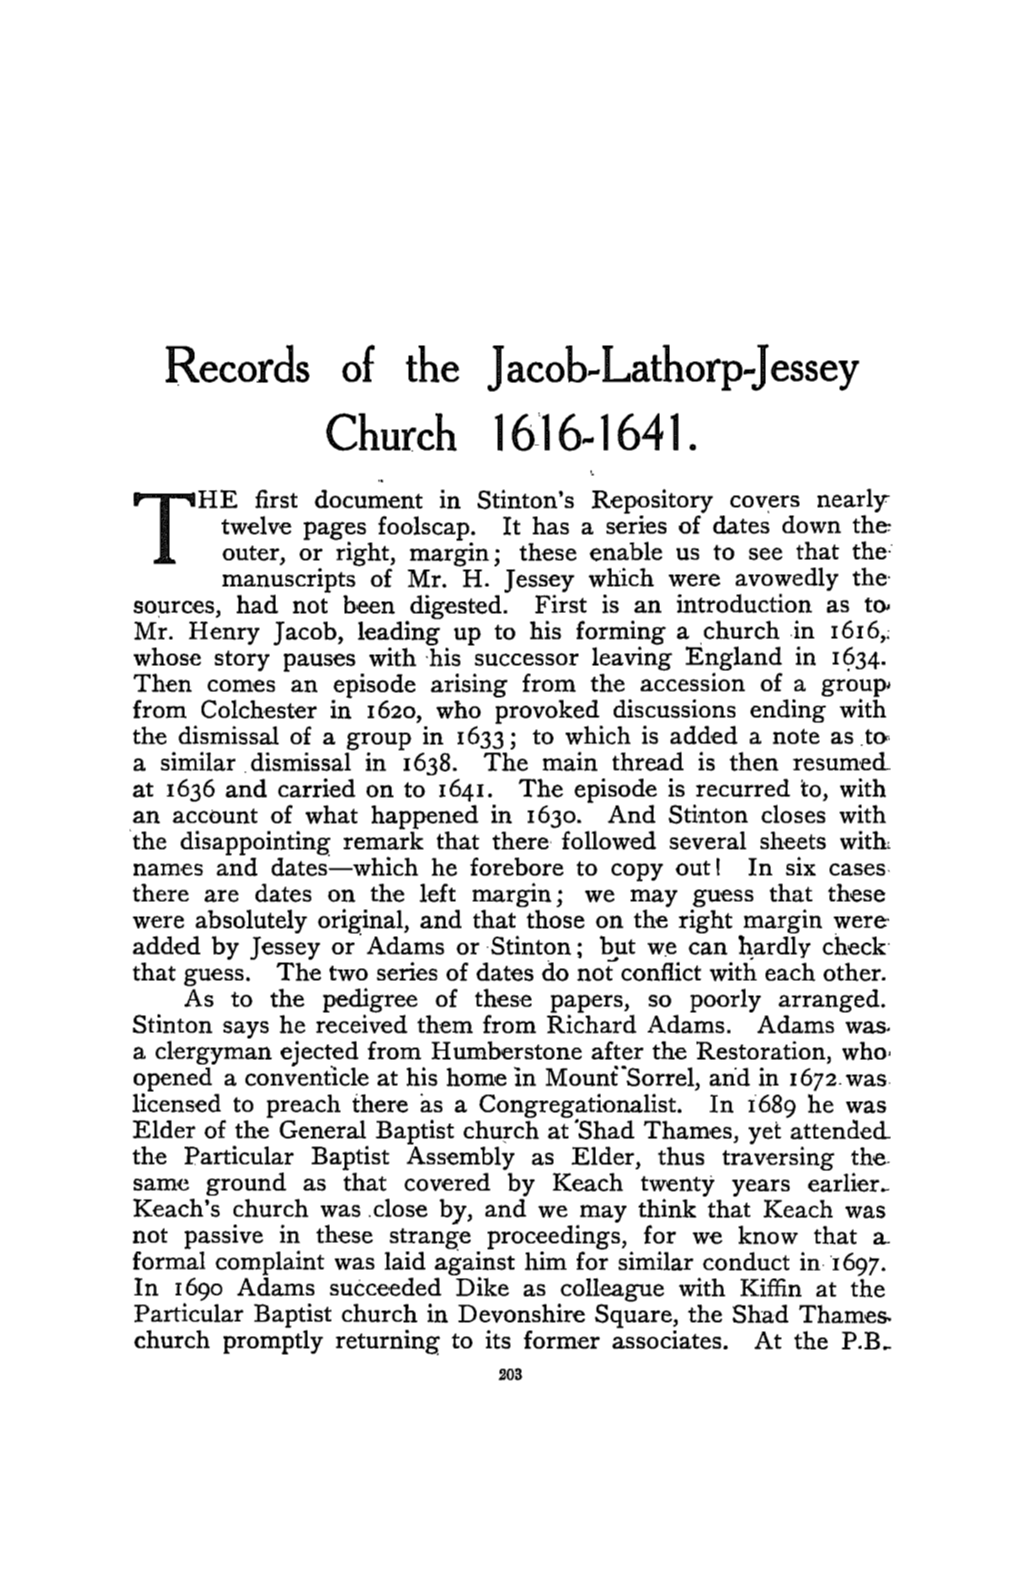 Records of the Jacob-Lathorp-Jessey Church, 1616-1641